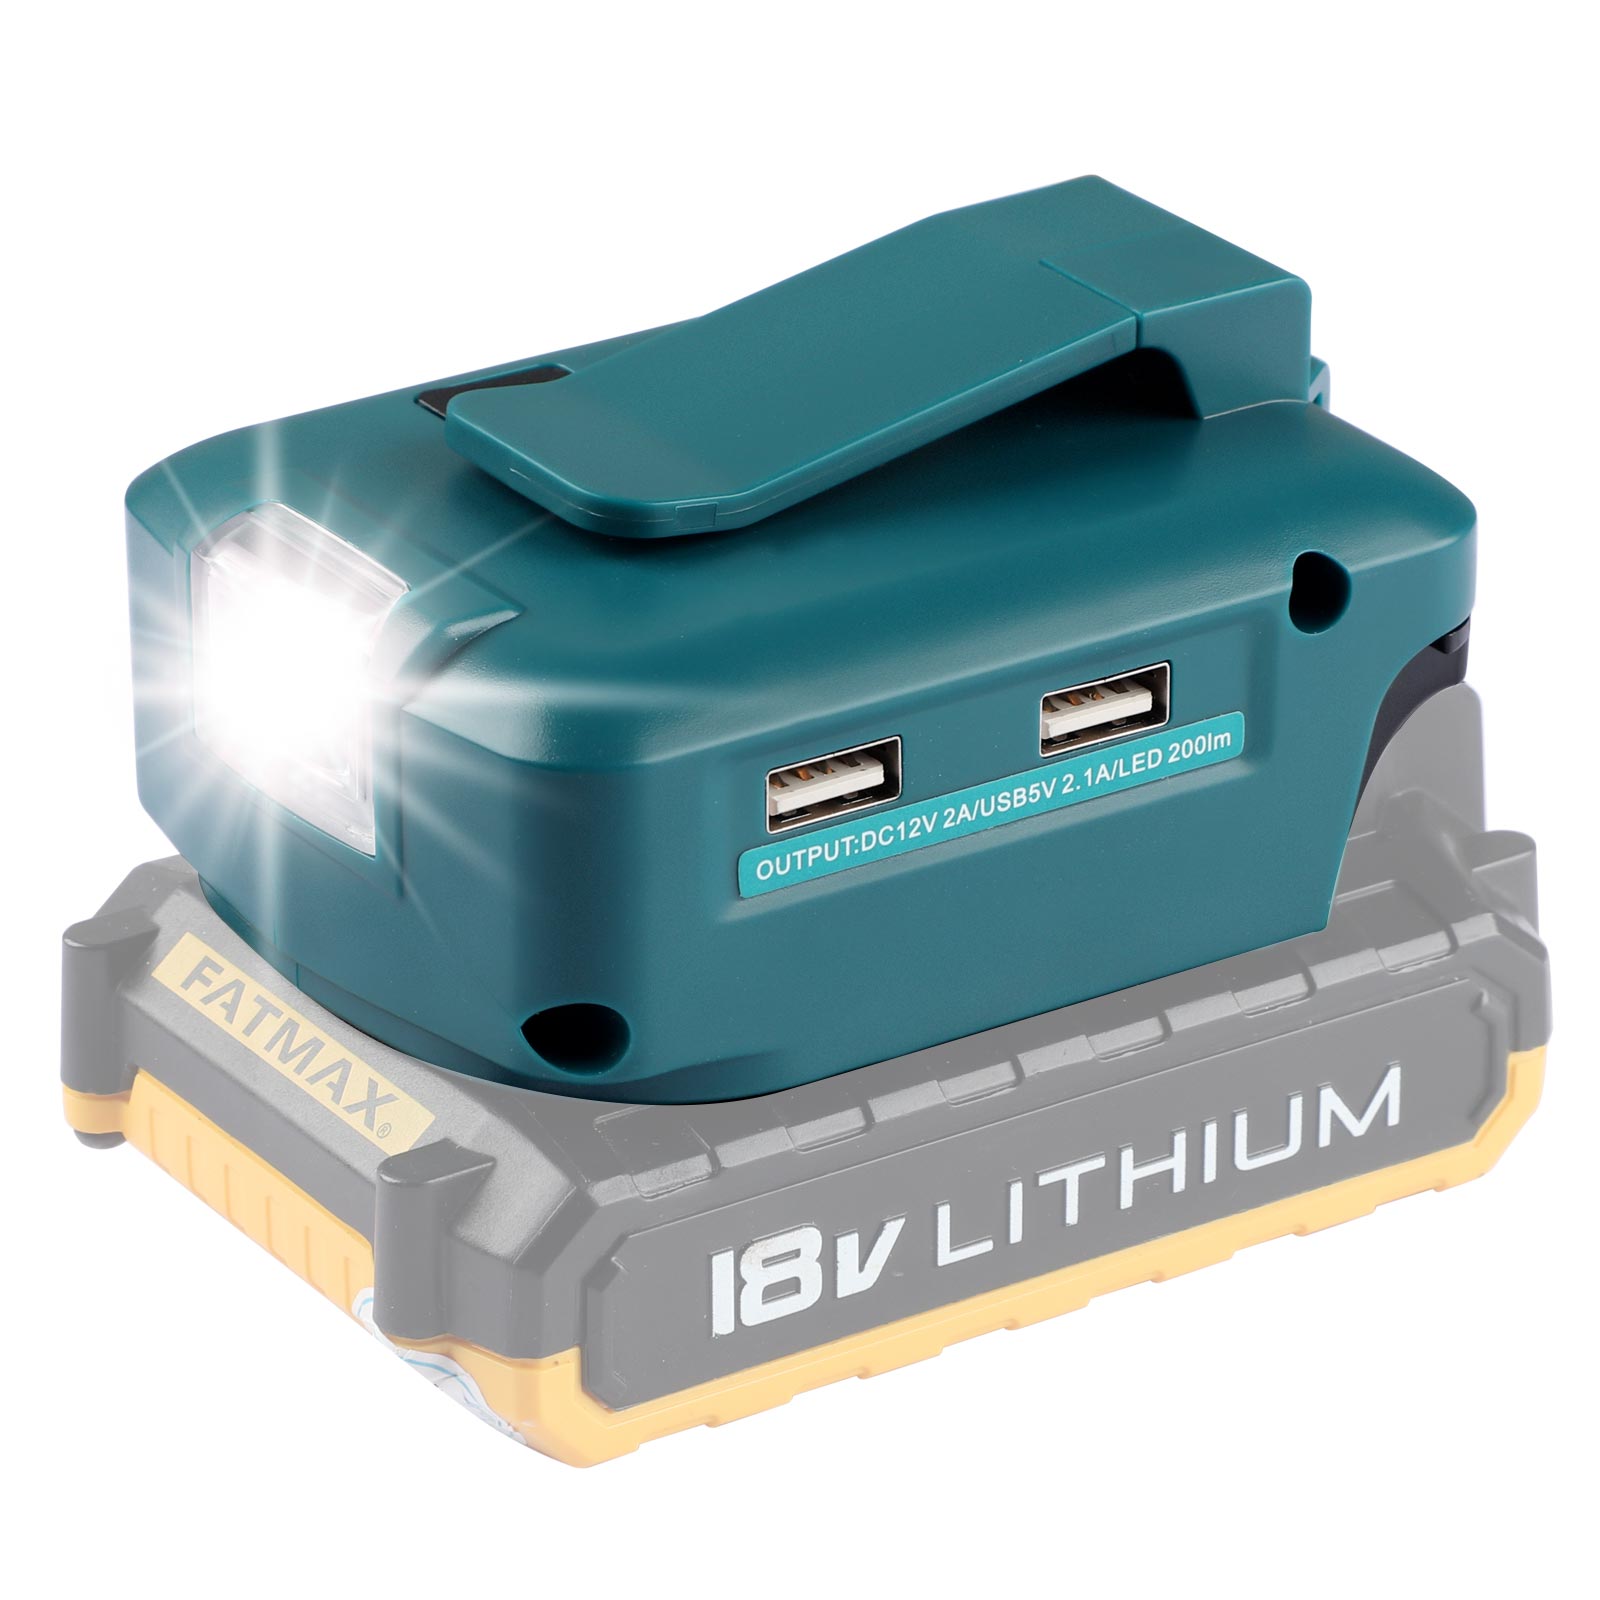 Urun Battery Adapter with DC Port &2 USB Port & Bright LED Light for Black&Decker 14.4-18V Lithium Battery Power Source